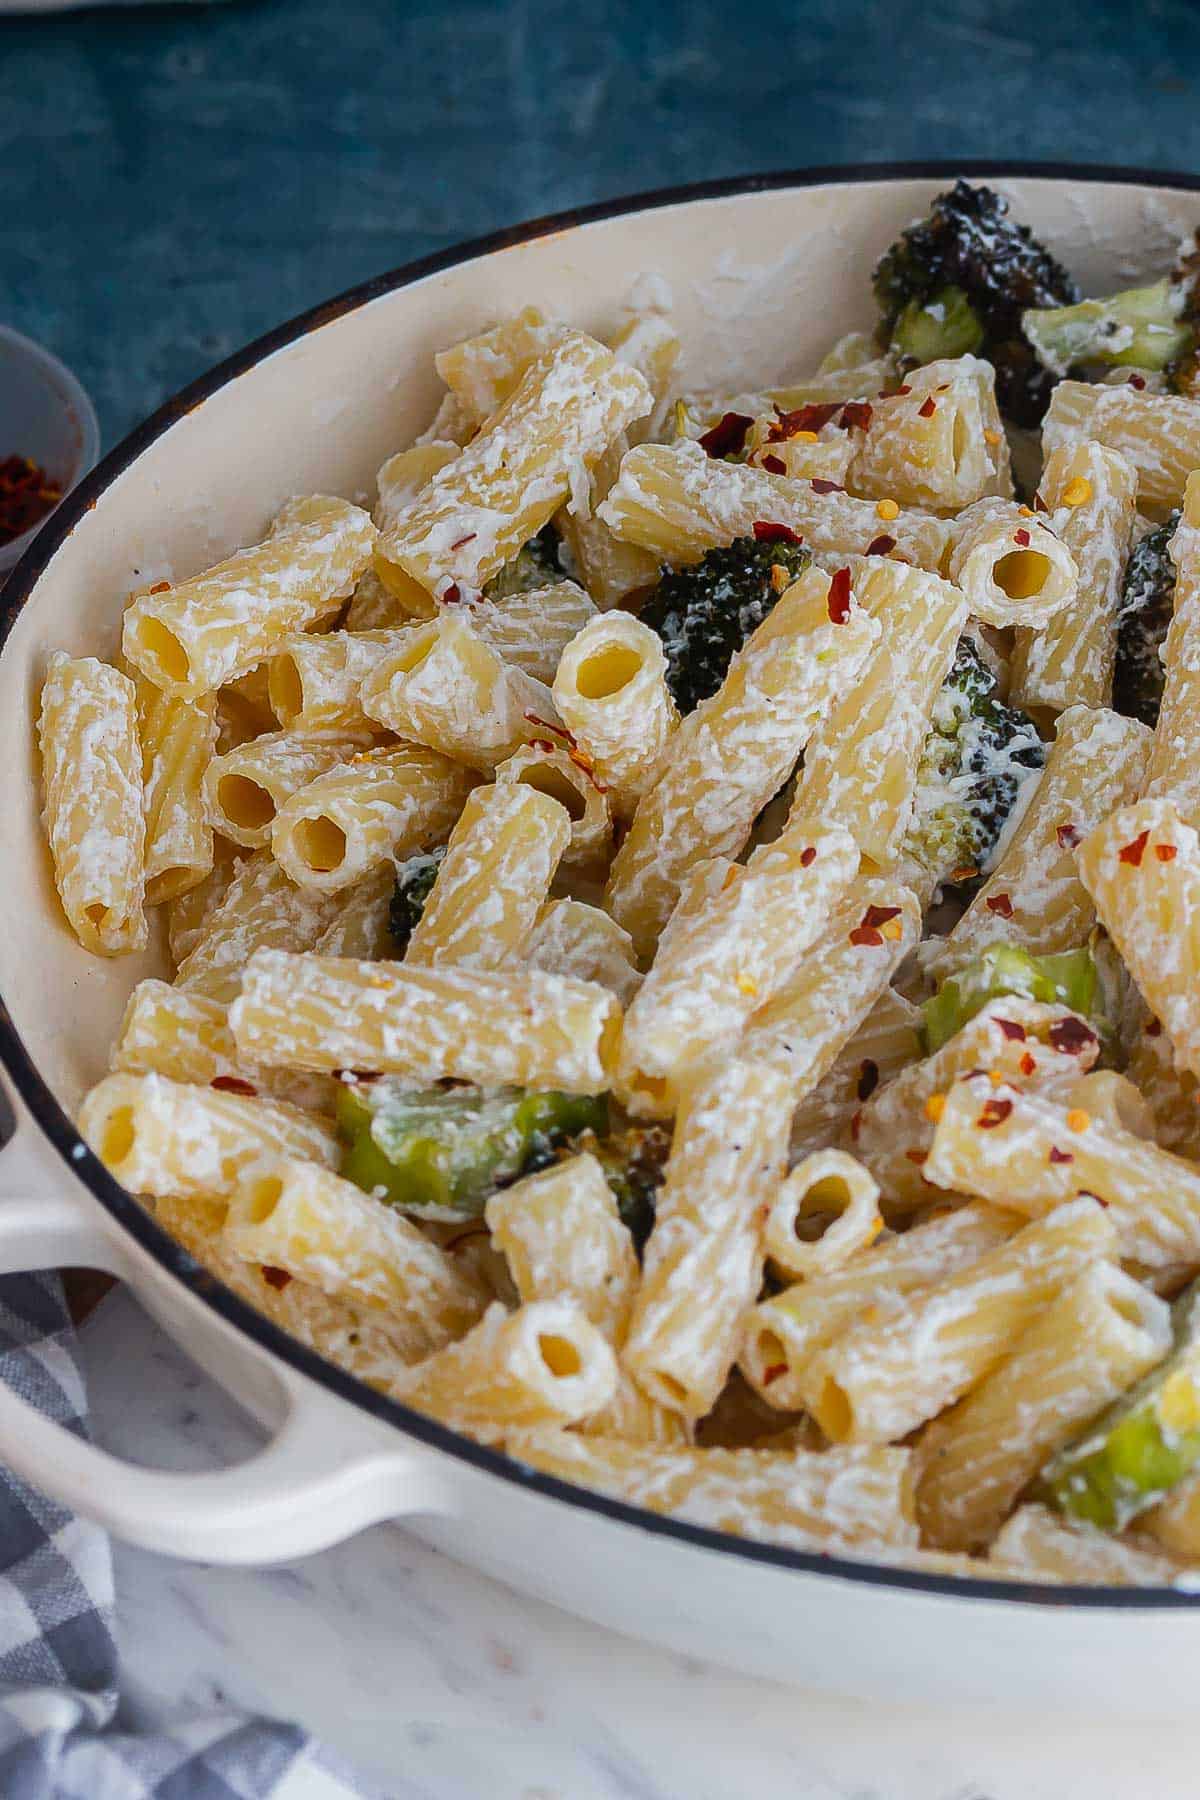 Dish of pasta and broccoli